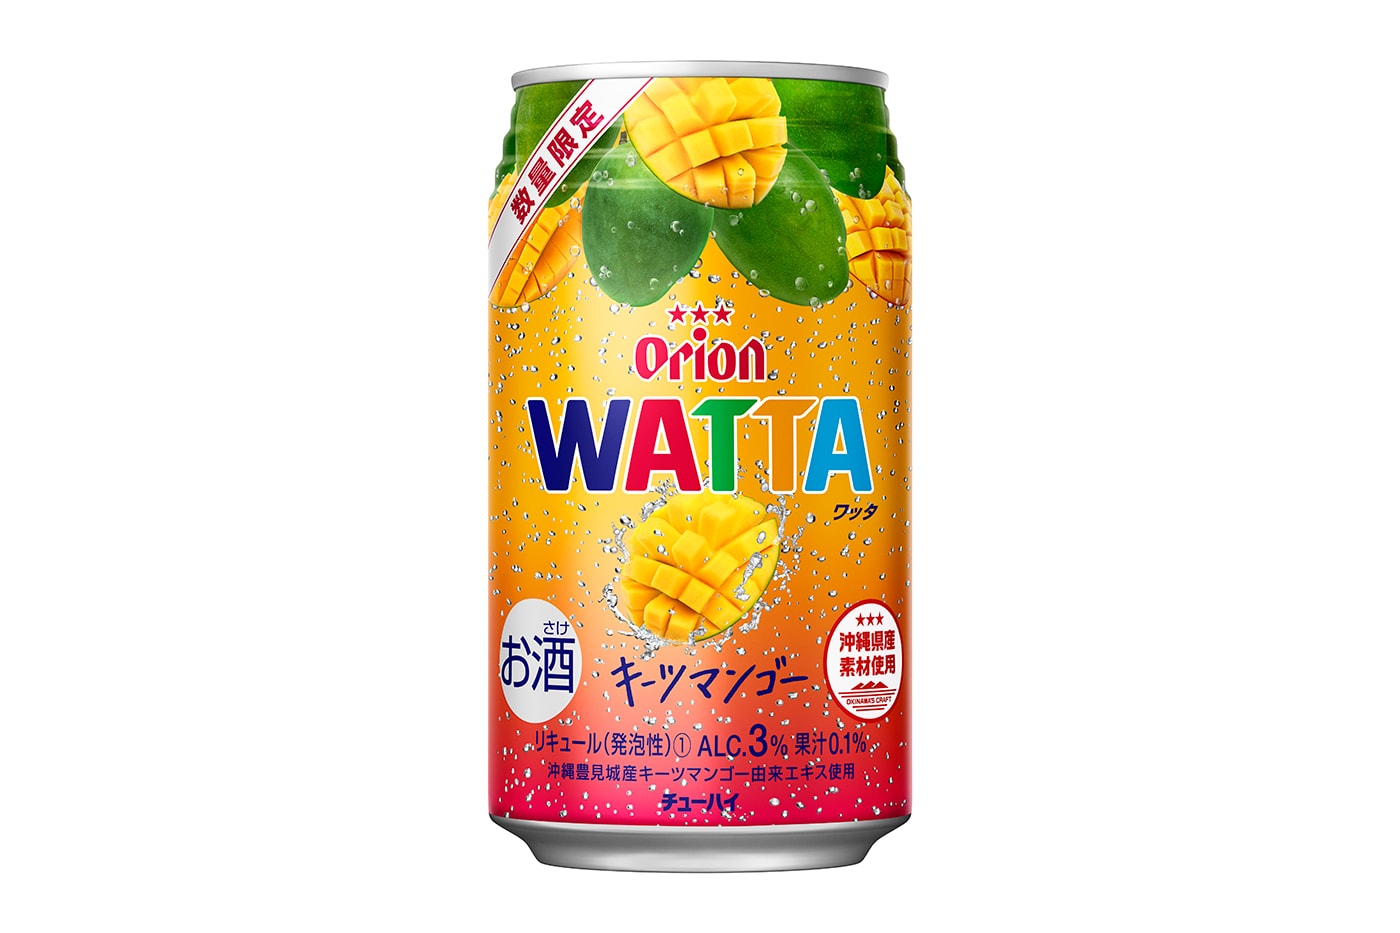 ORION Watta Keitt Mango Chu-Hi release food waste sustainability environment exports food alcohol shochu highball Japan Summer drinks carbonated 